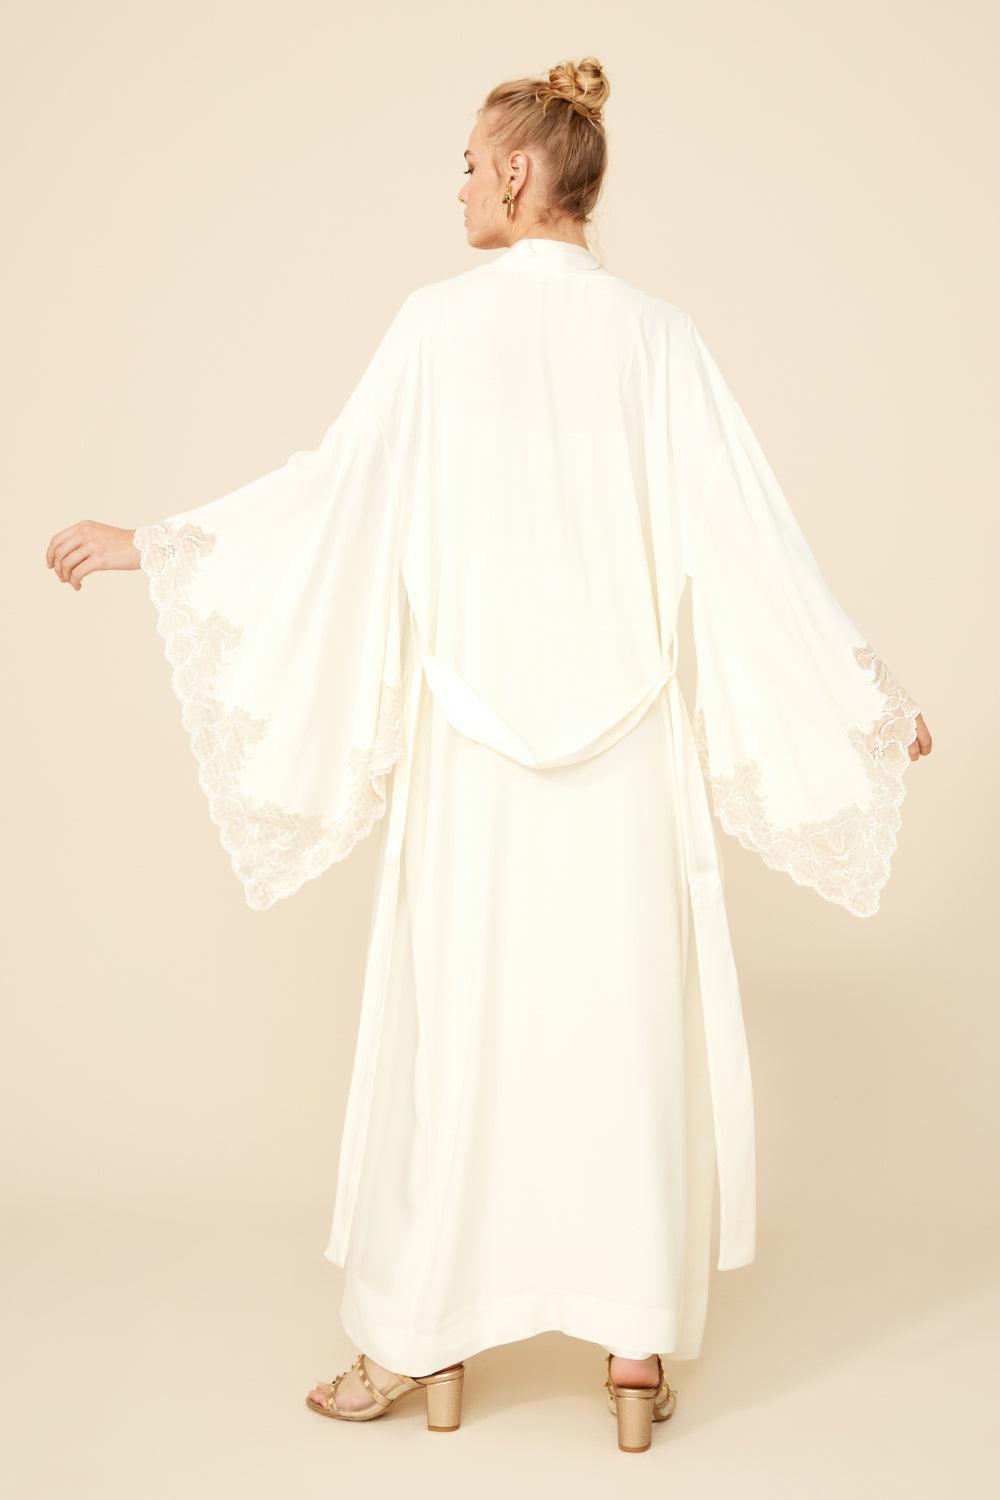 Hermione - Long Rayon Kimono Set - Off White with Gold Lace - Bocan